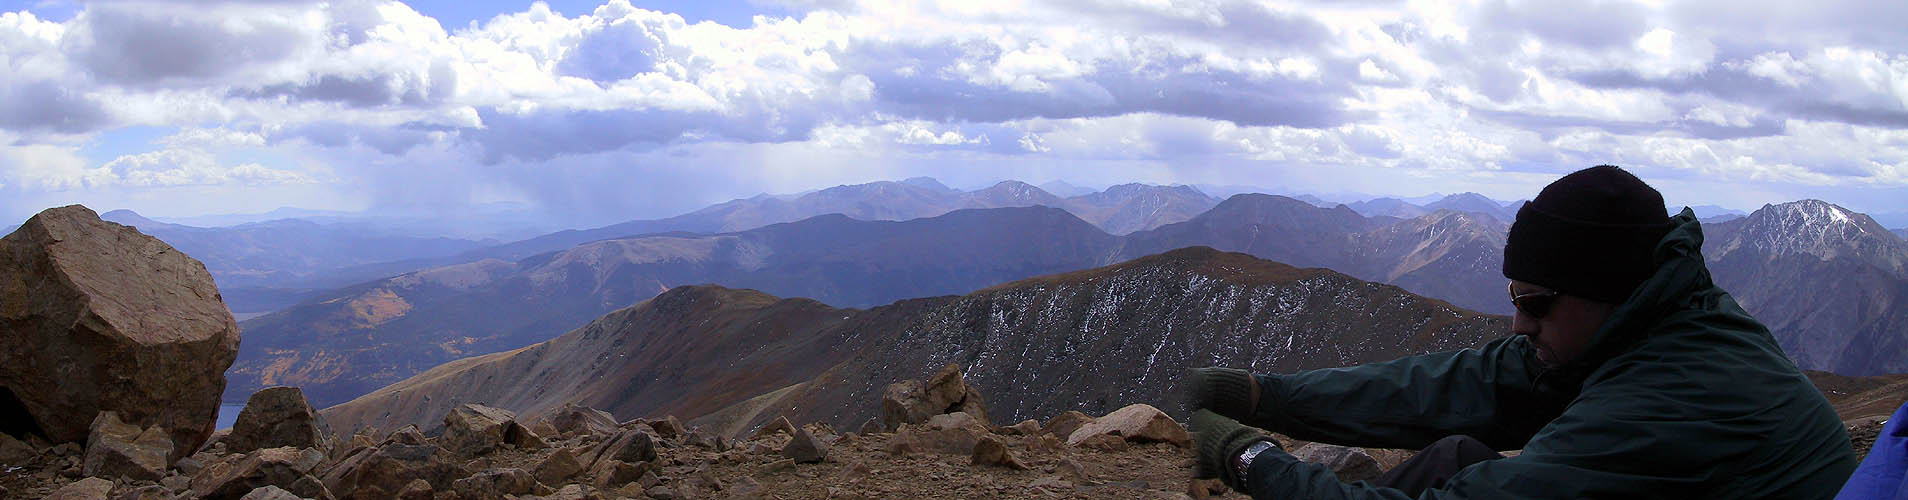 Mt Elbert 2001: Summit Panoramic